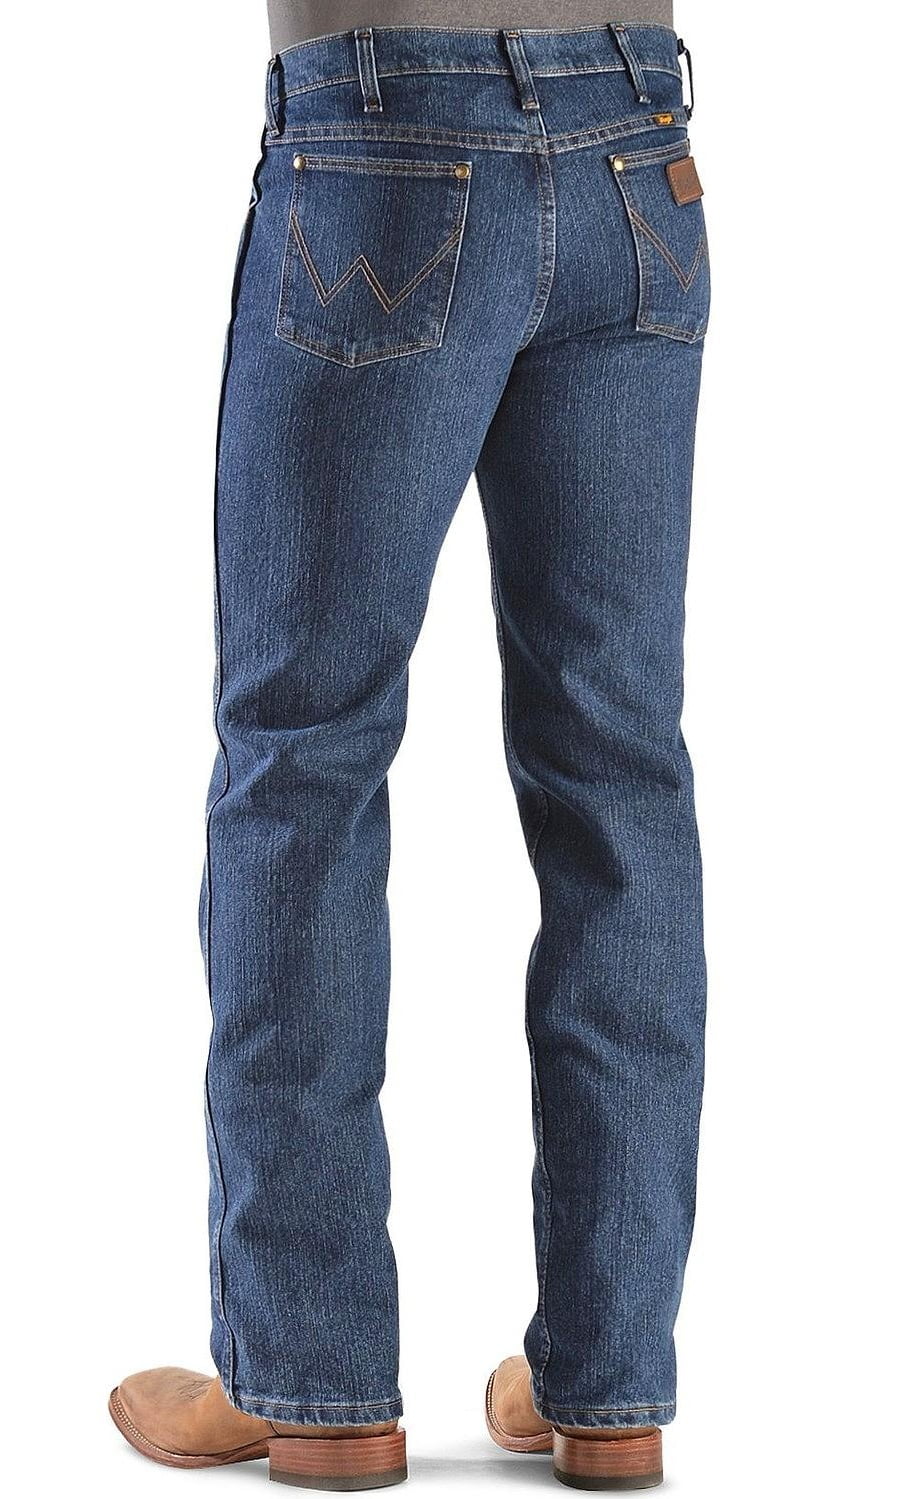 wrangler advanced comfort slim fit jeans